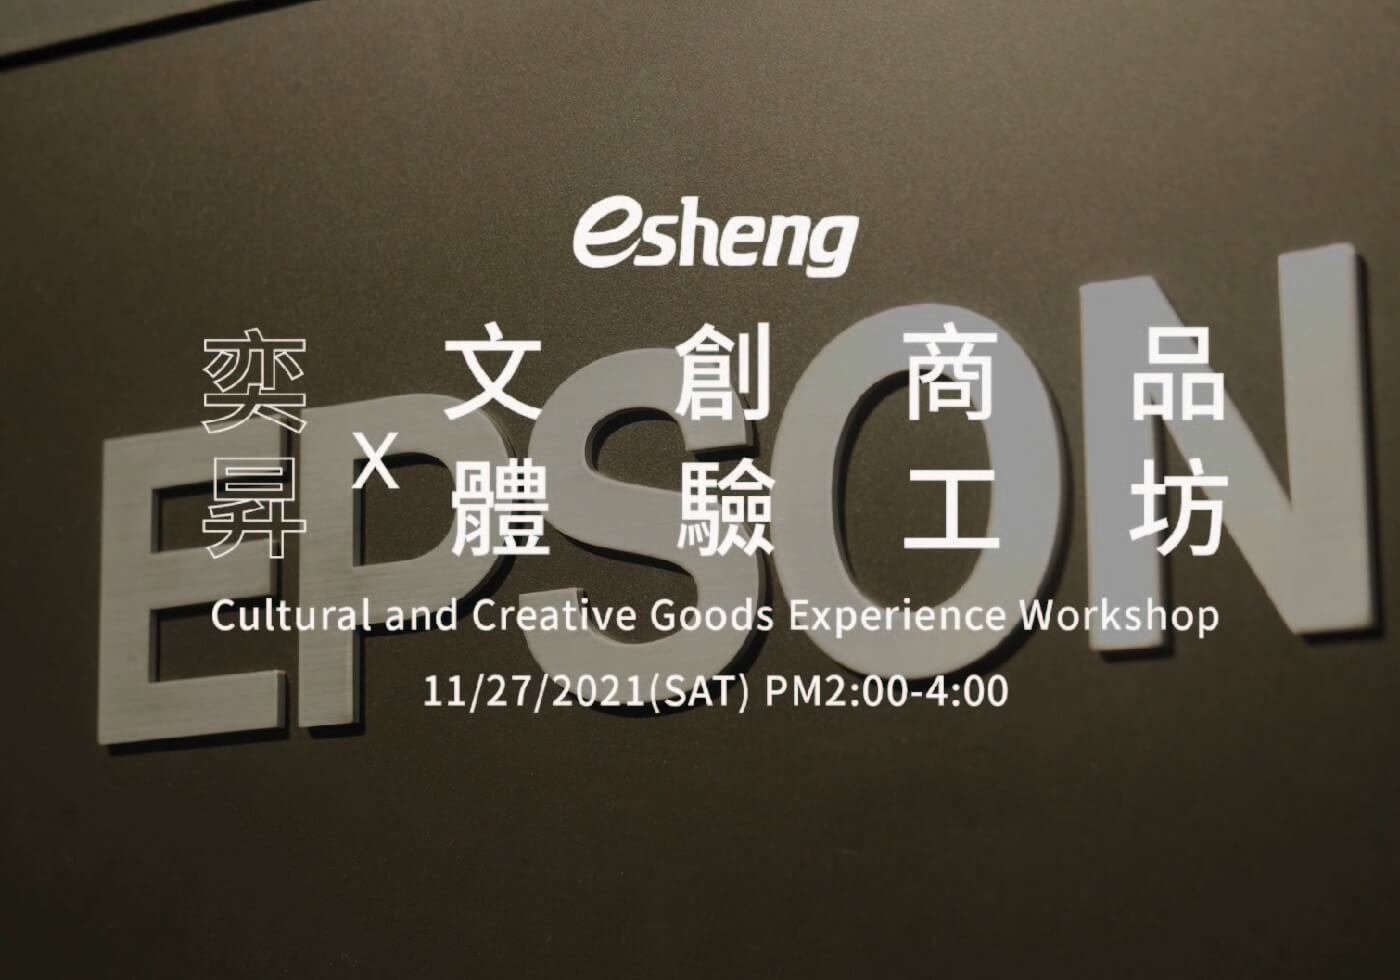 Epson x 奕昇 文創商品體驗工坊 封面